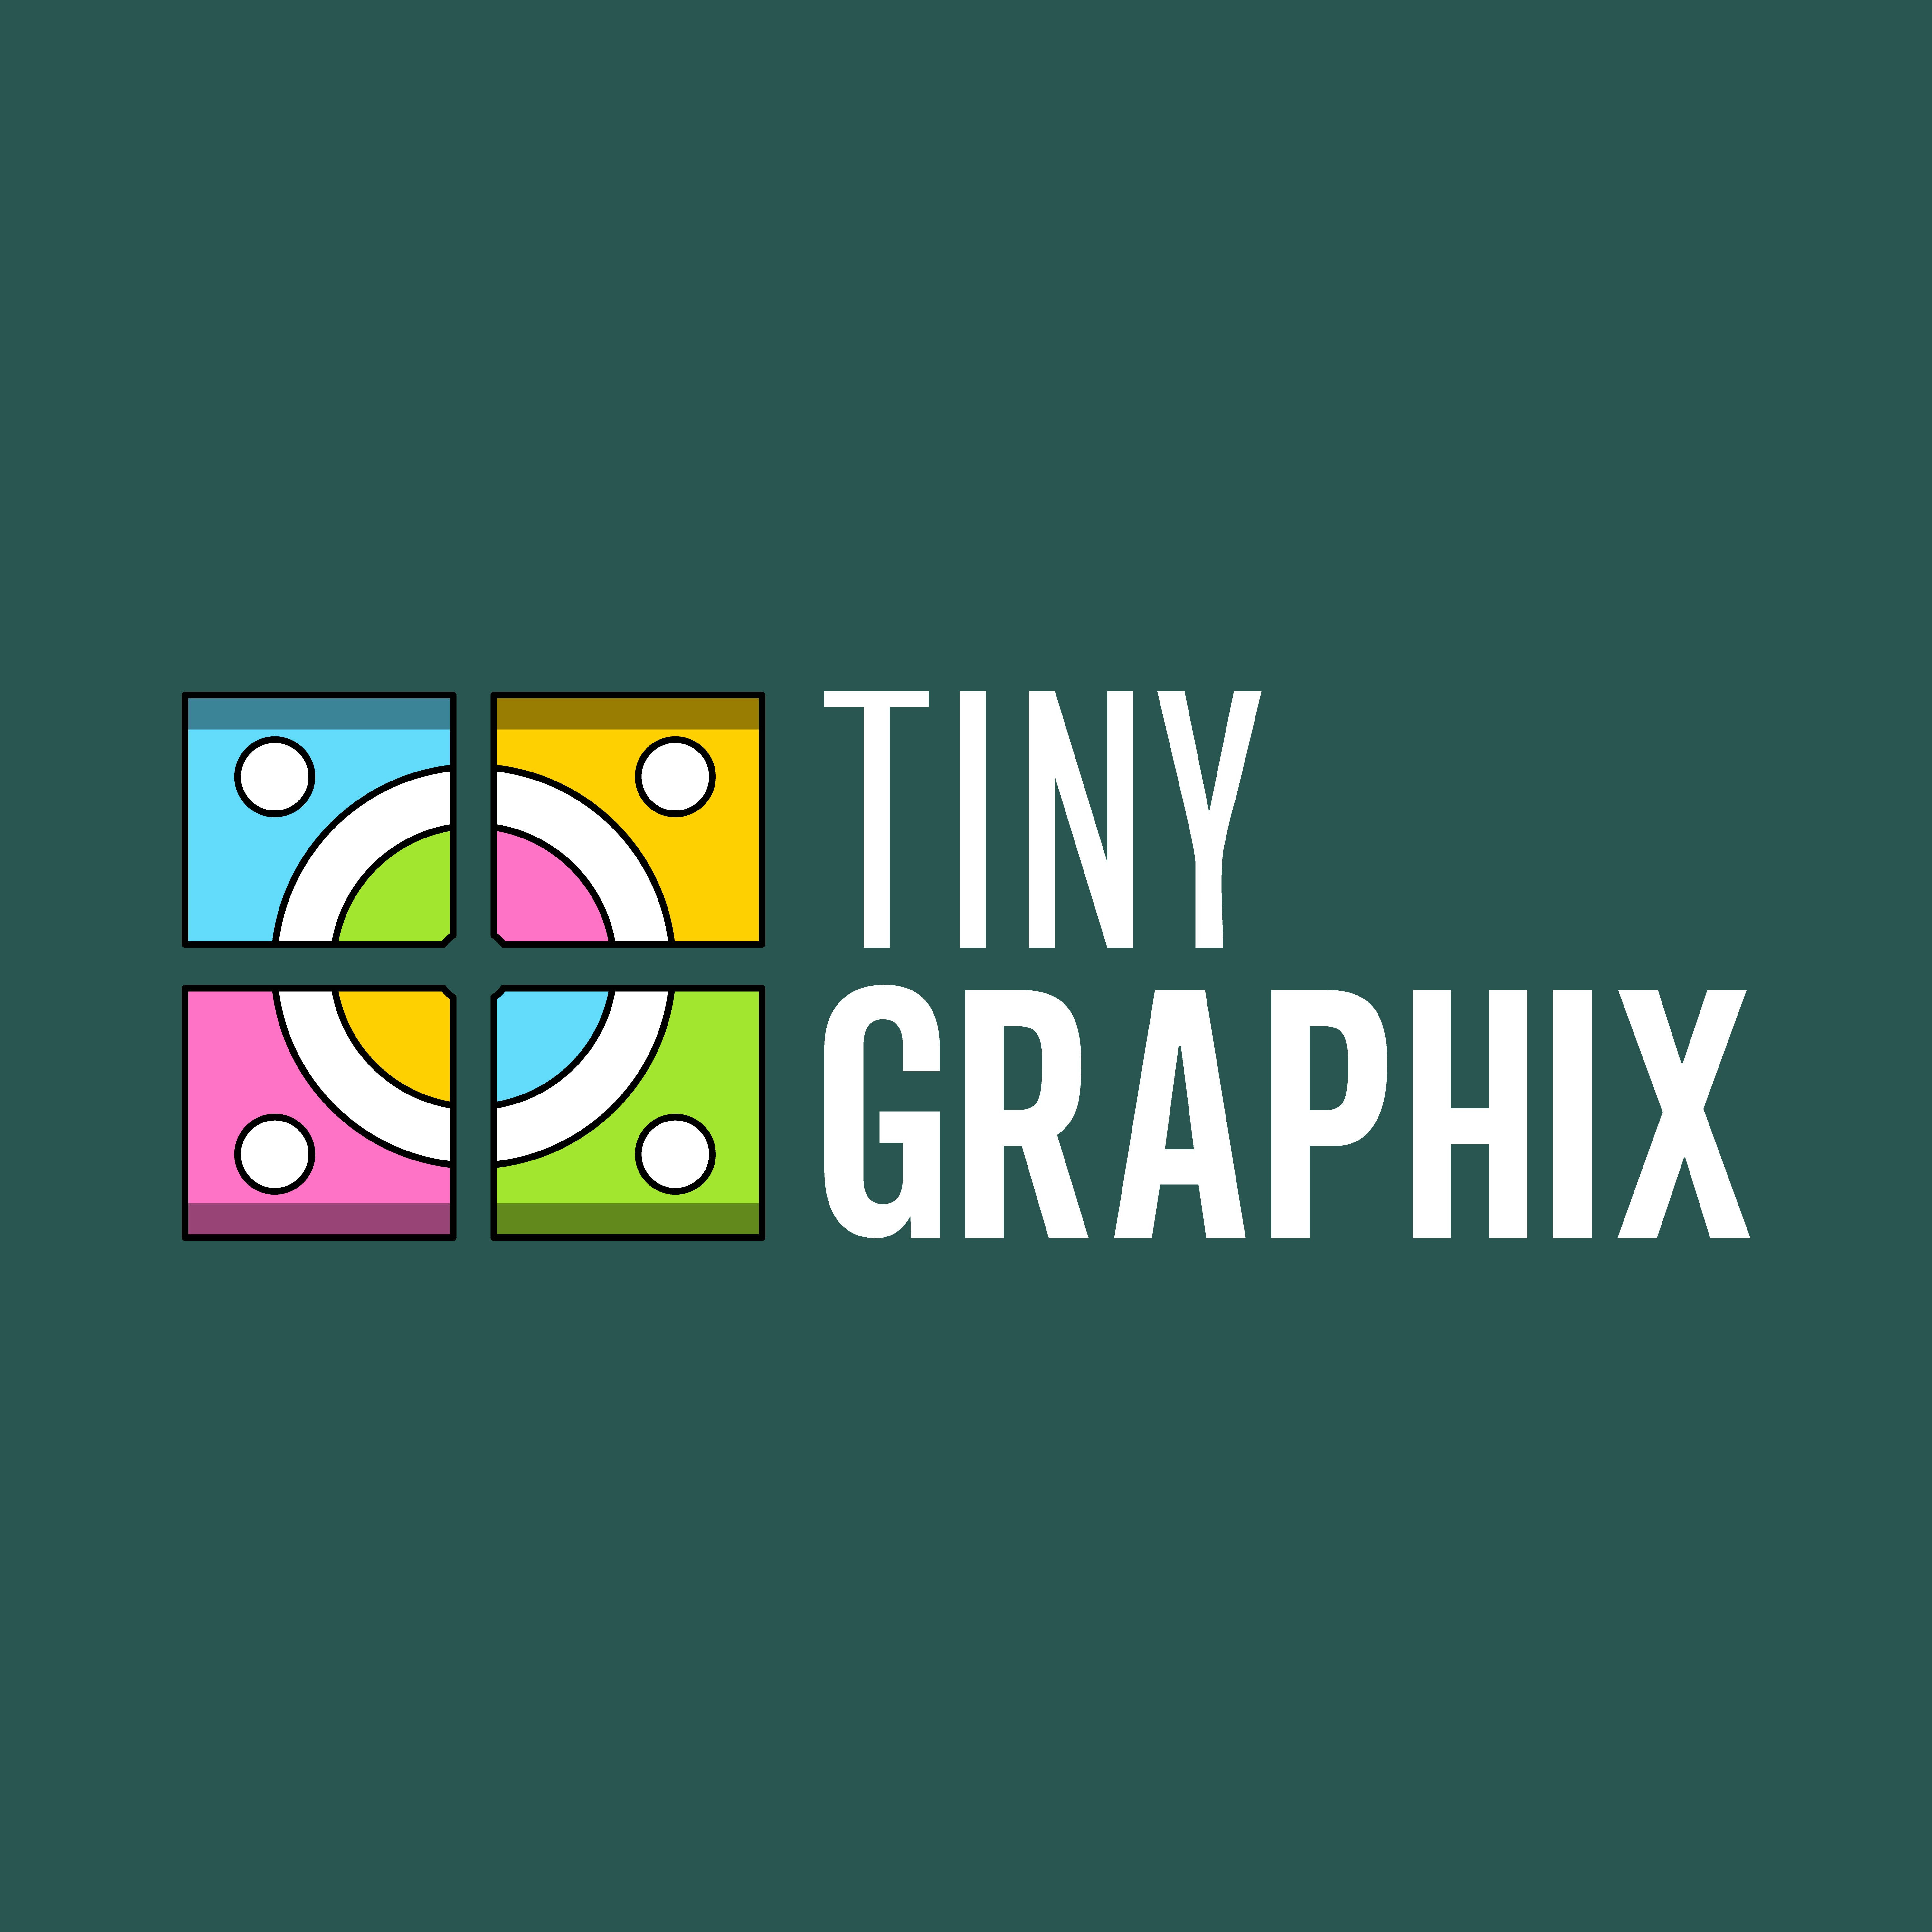 TINY GRAPHIX's profile picture